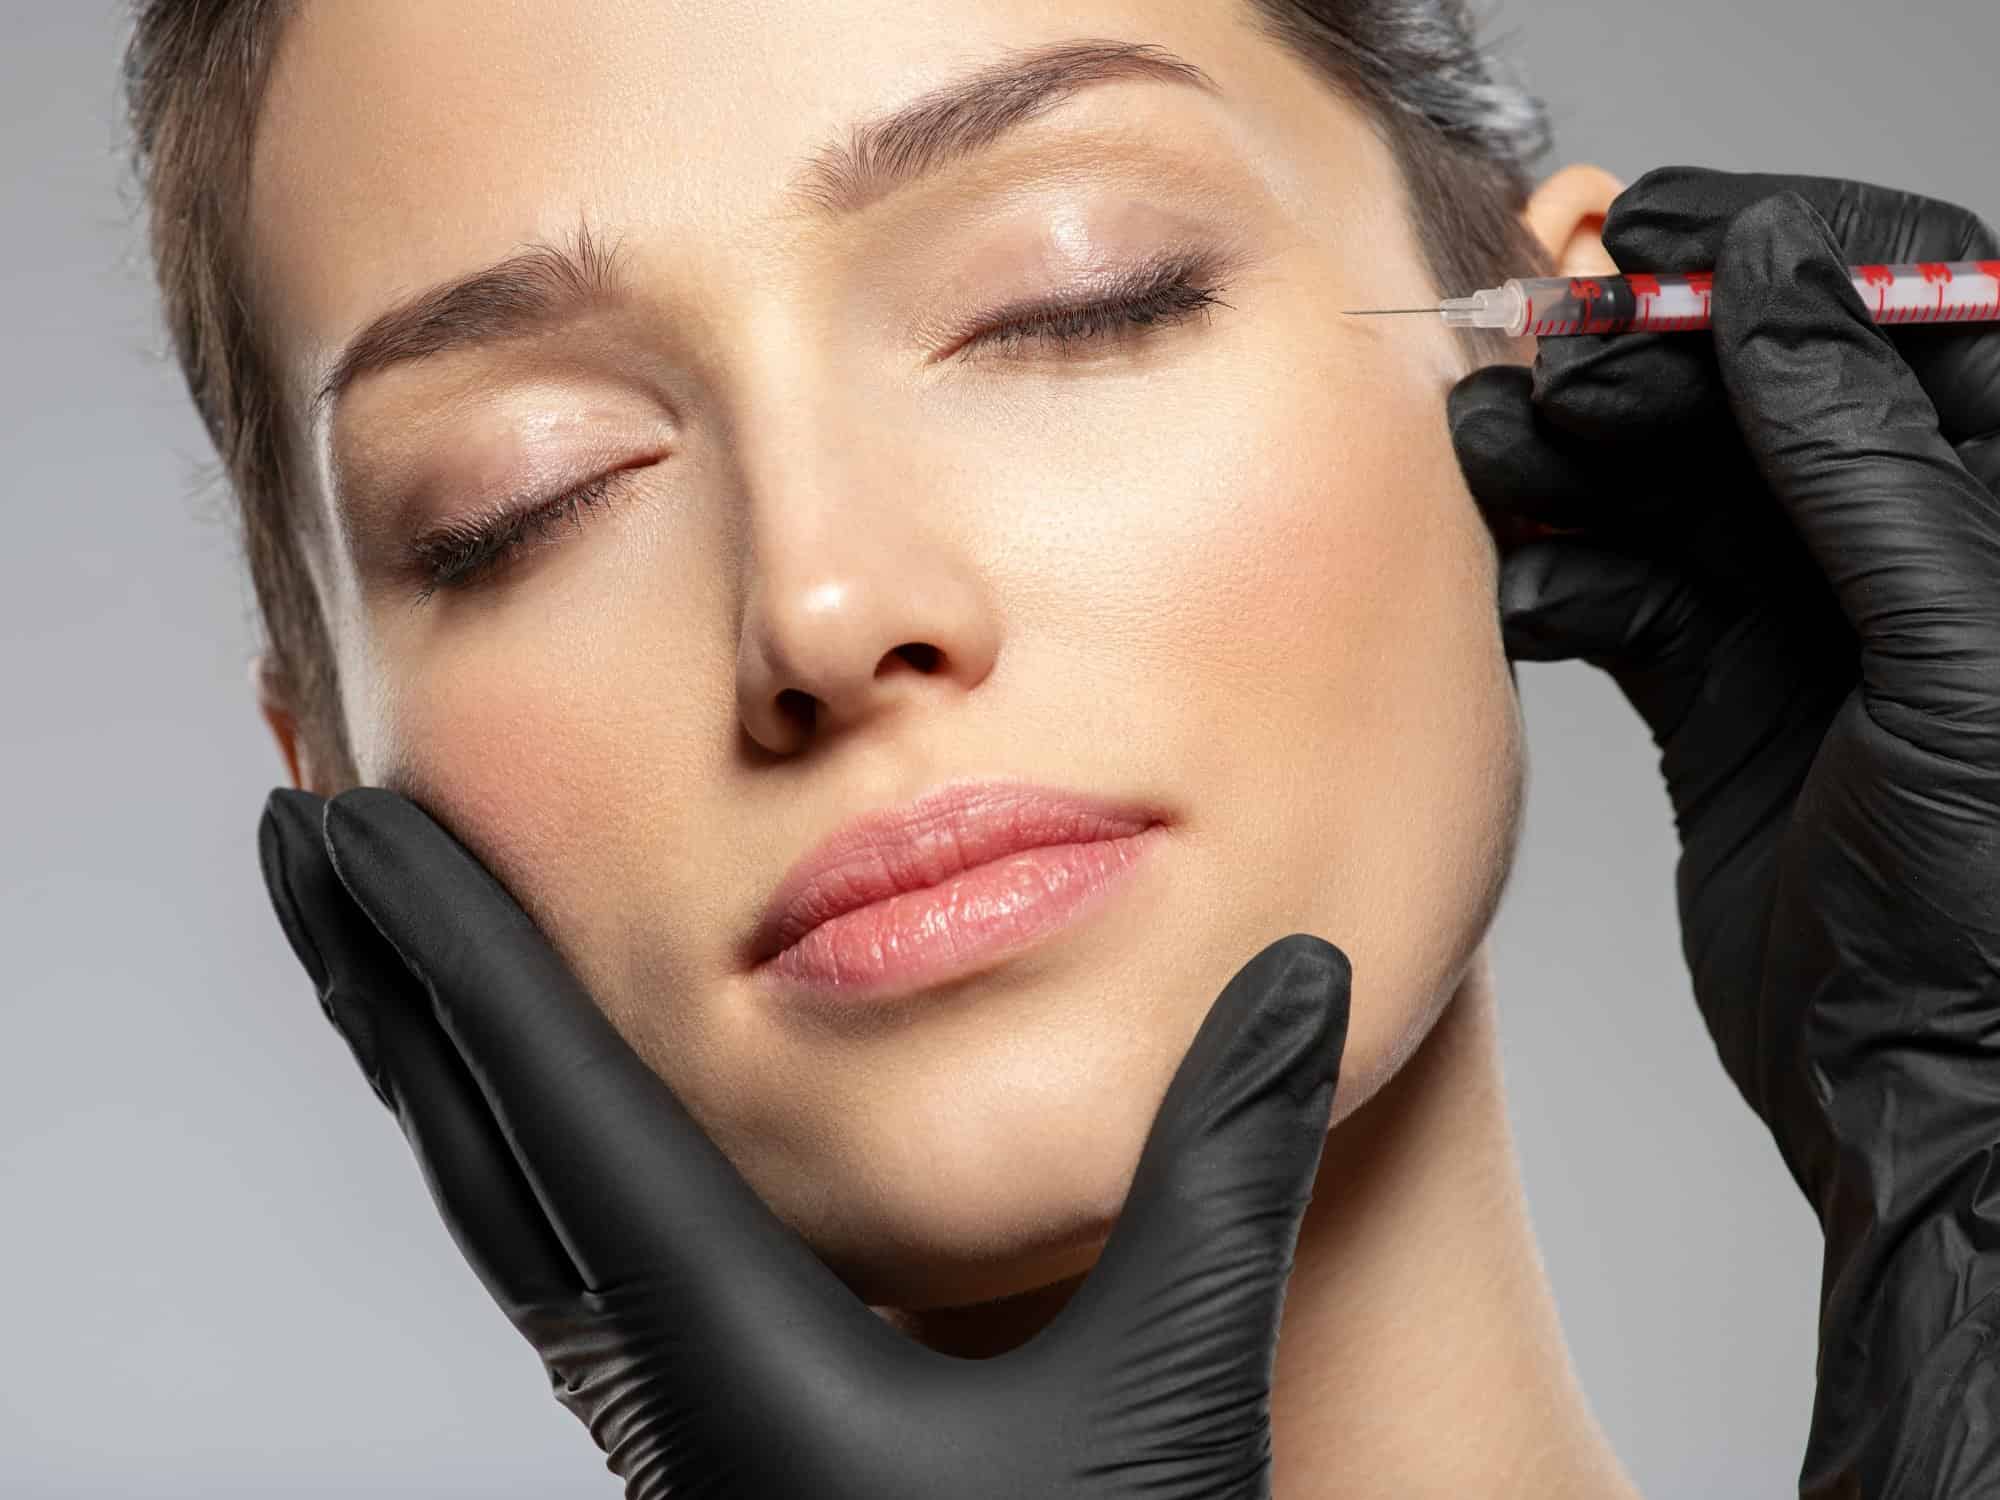 Caucasian woman getting botox cosmetic injection in forehead. Woman gets botox injection in her face